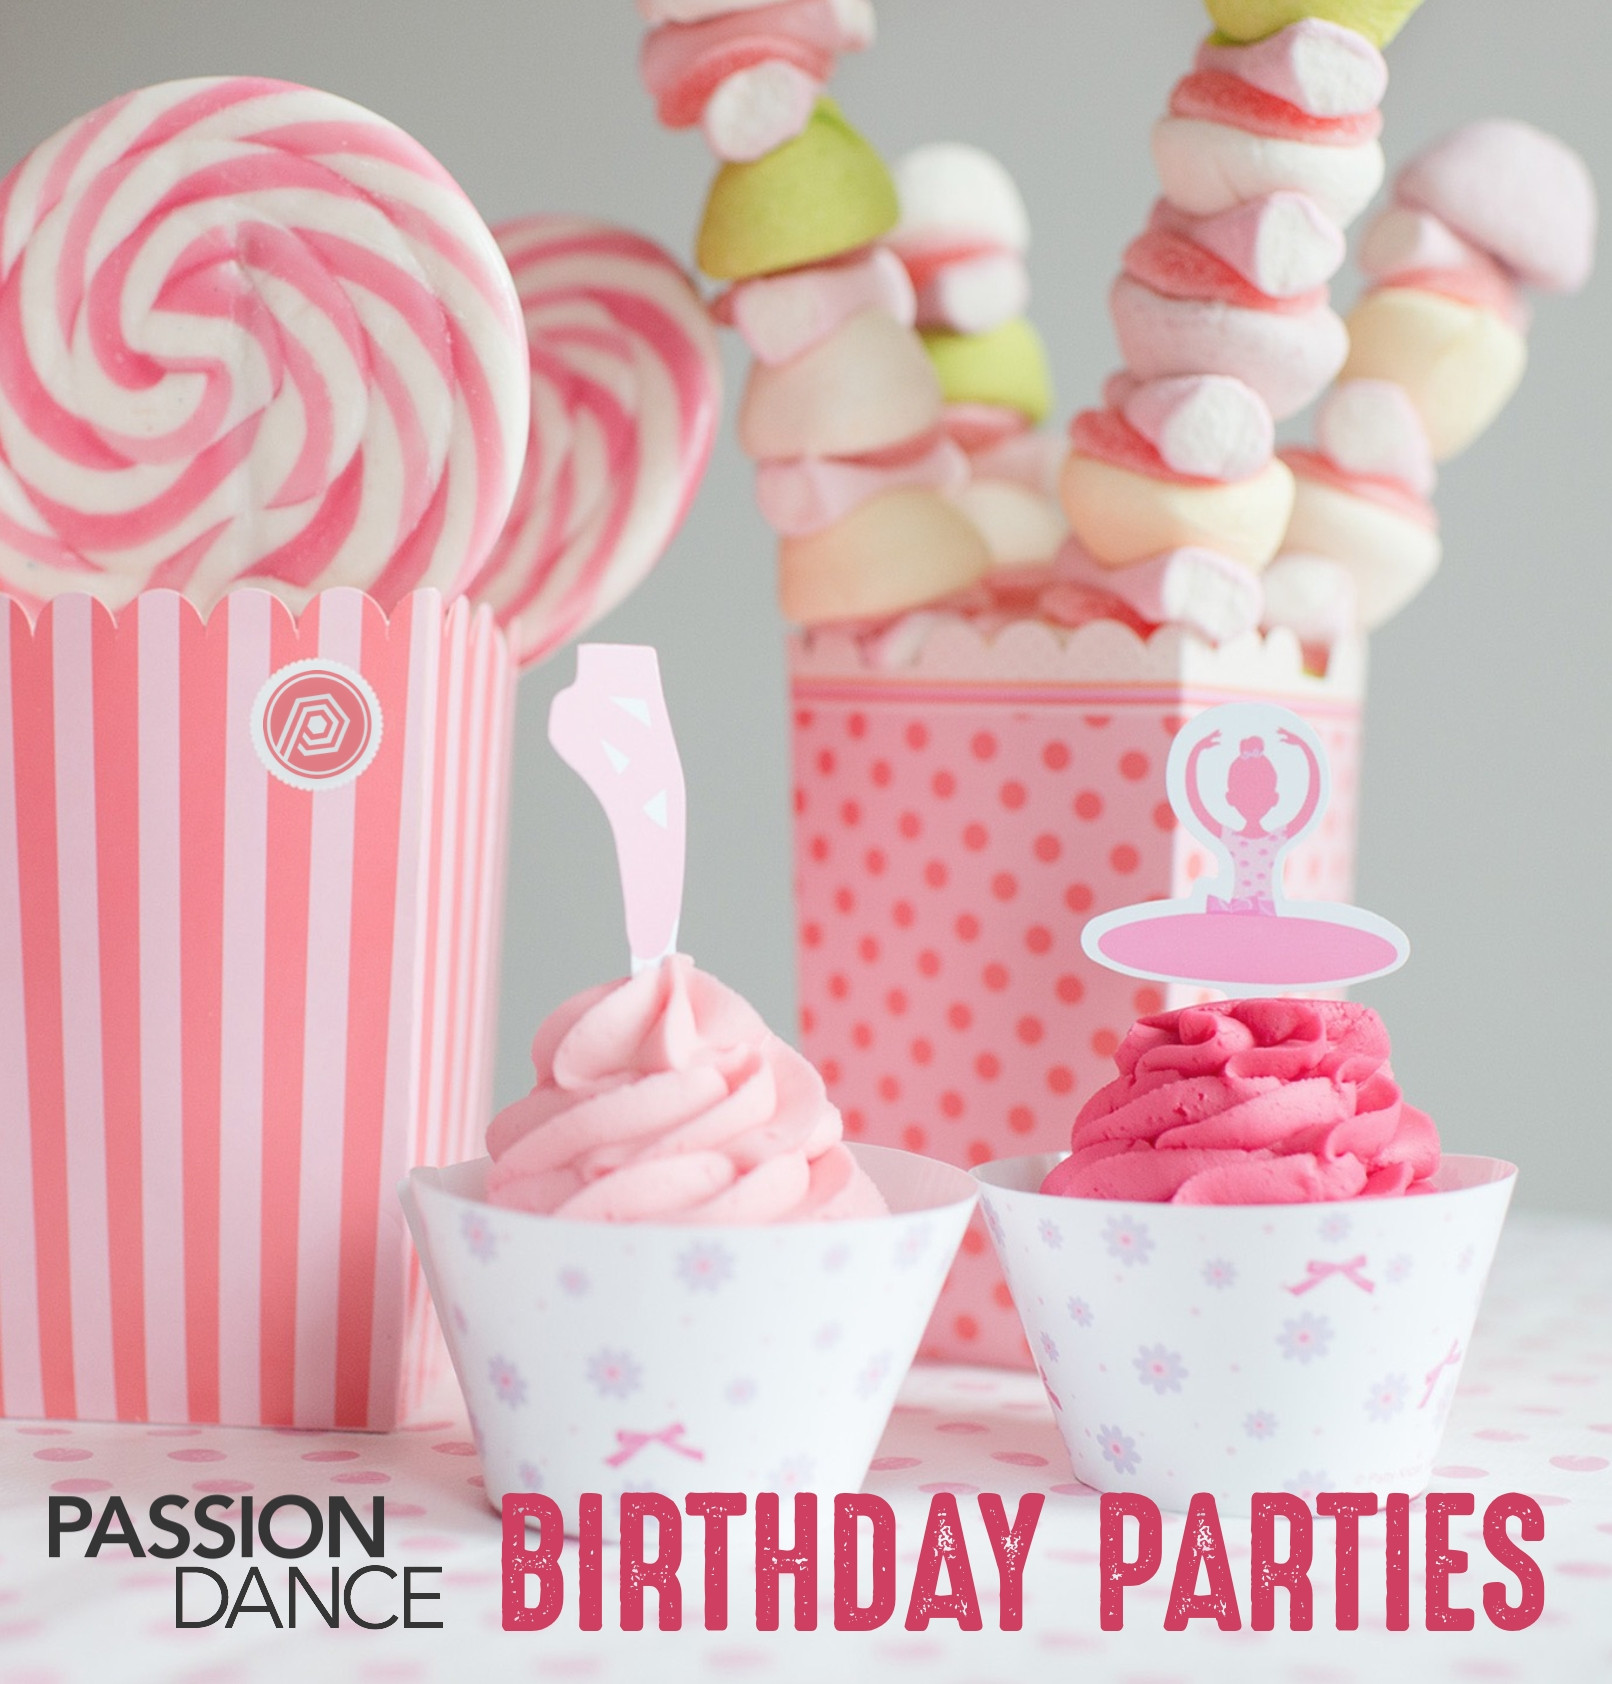 Birthday Party Ideas Richmond Va
 10 Most Popular Birthday Party Ideas Richmond Va 2019